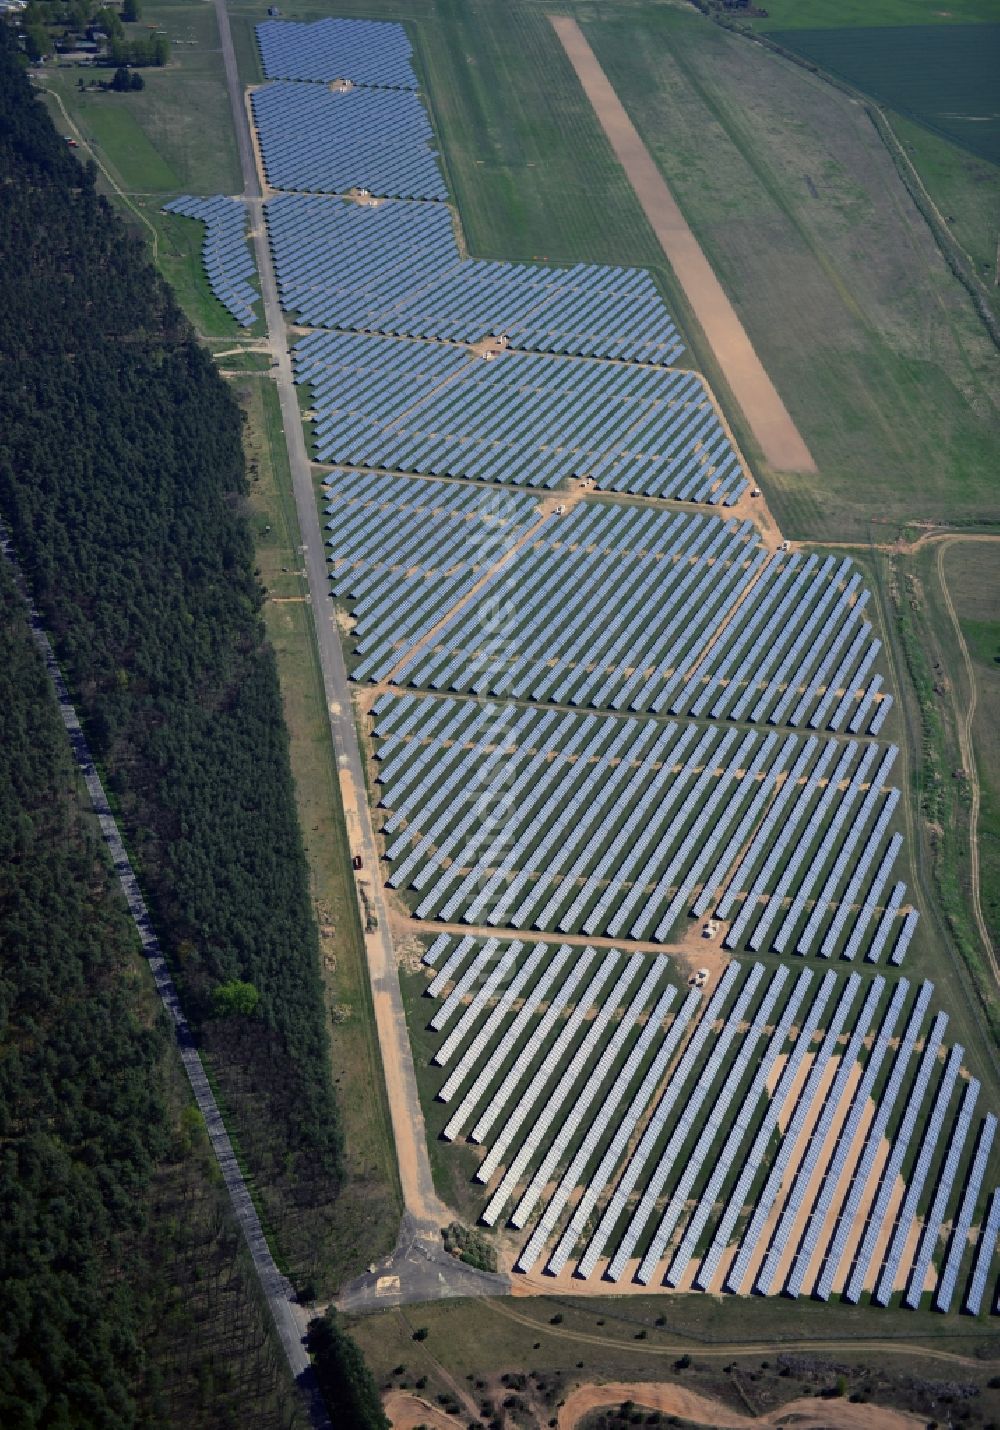 Luftbild Eggersdorf bei Müncheberg - Solarenergiepark / Solarpark / Solarkraftwerk am Flugplatz Eggersdorf im Bundesland Brandenburg